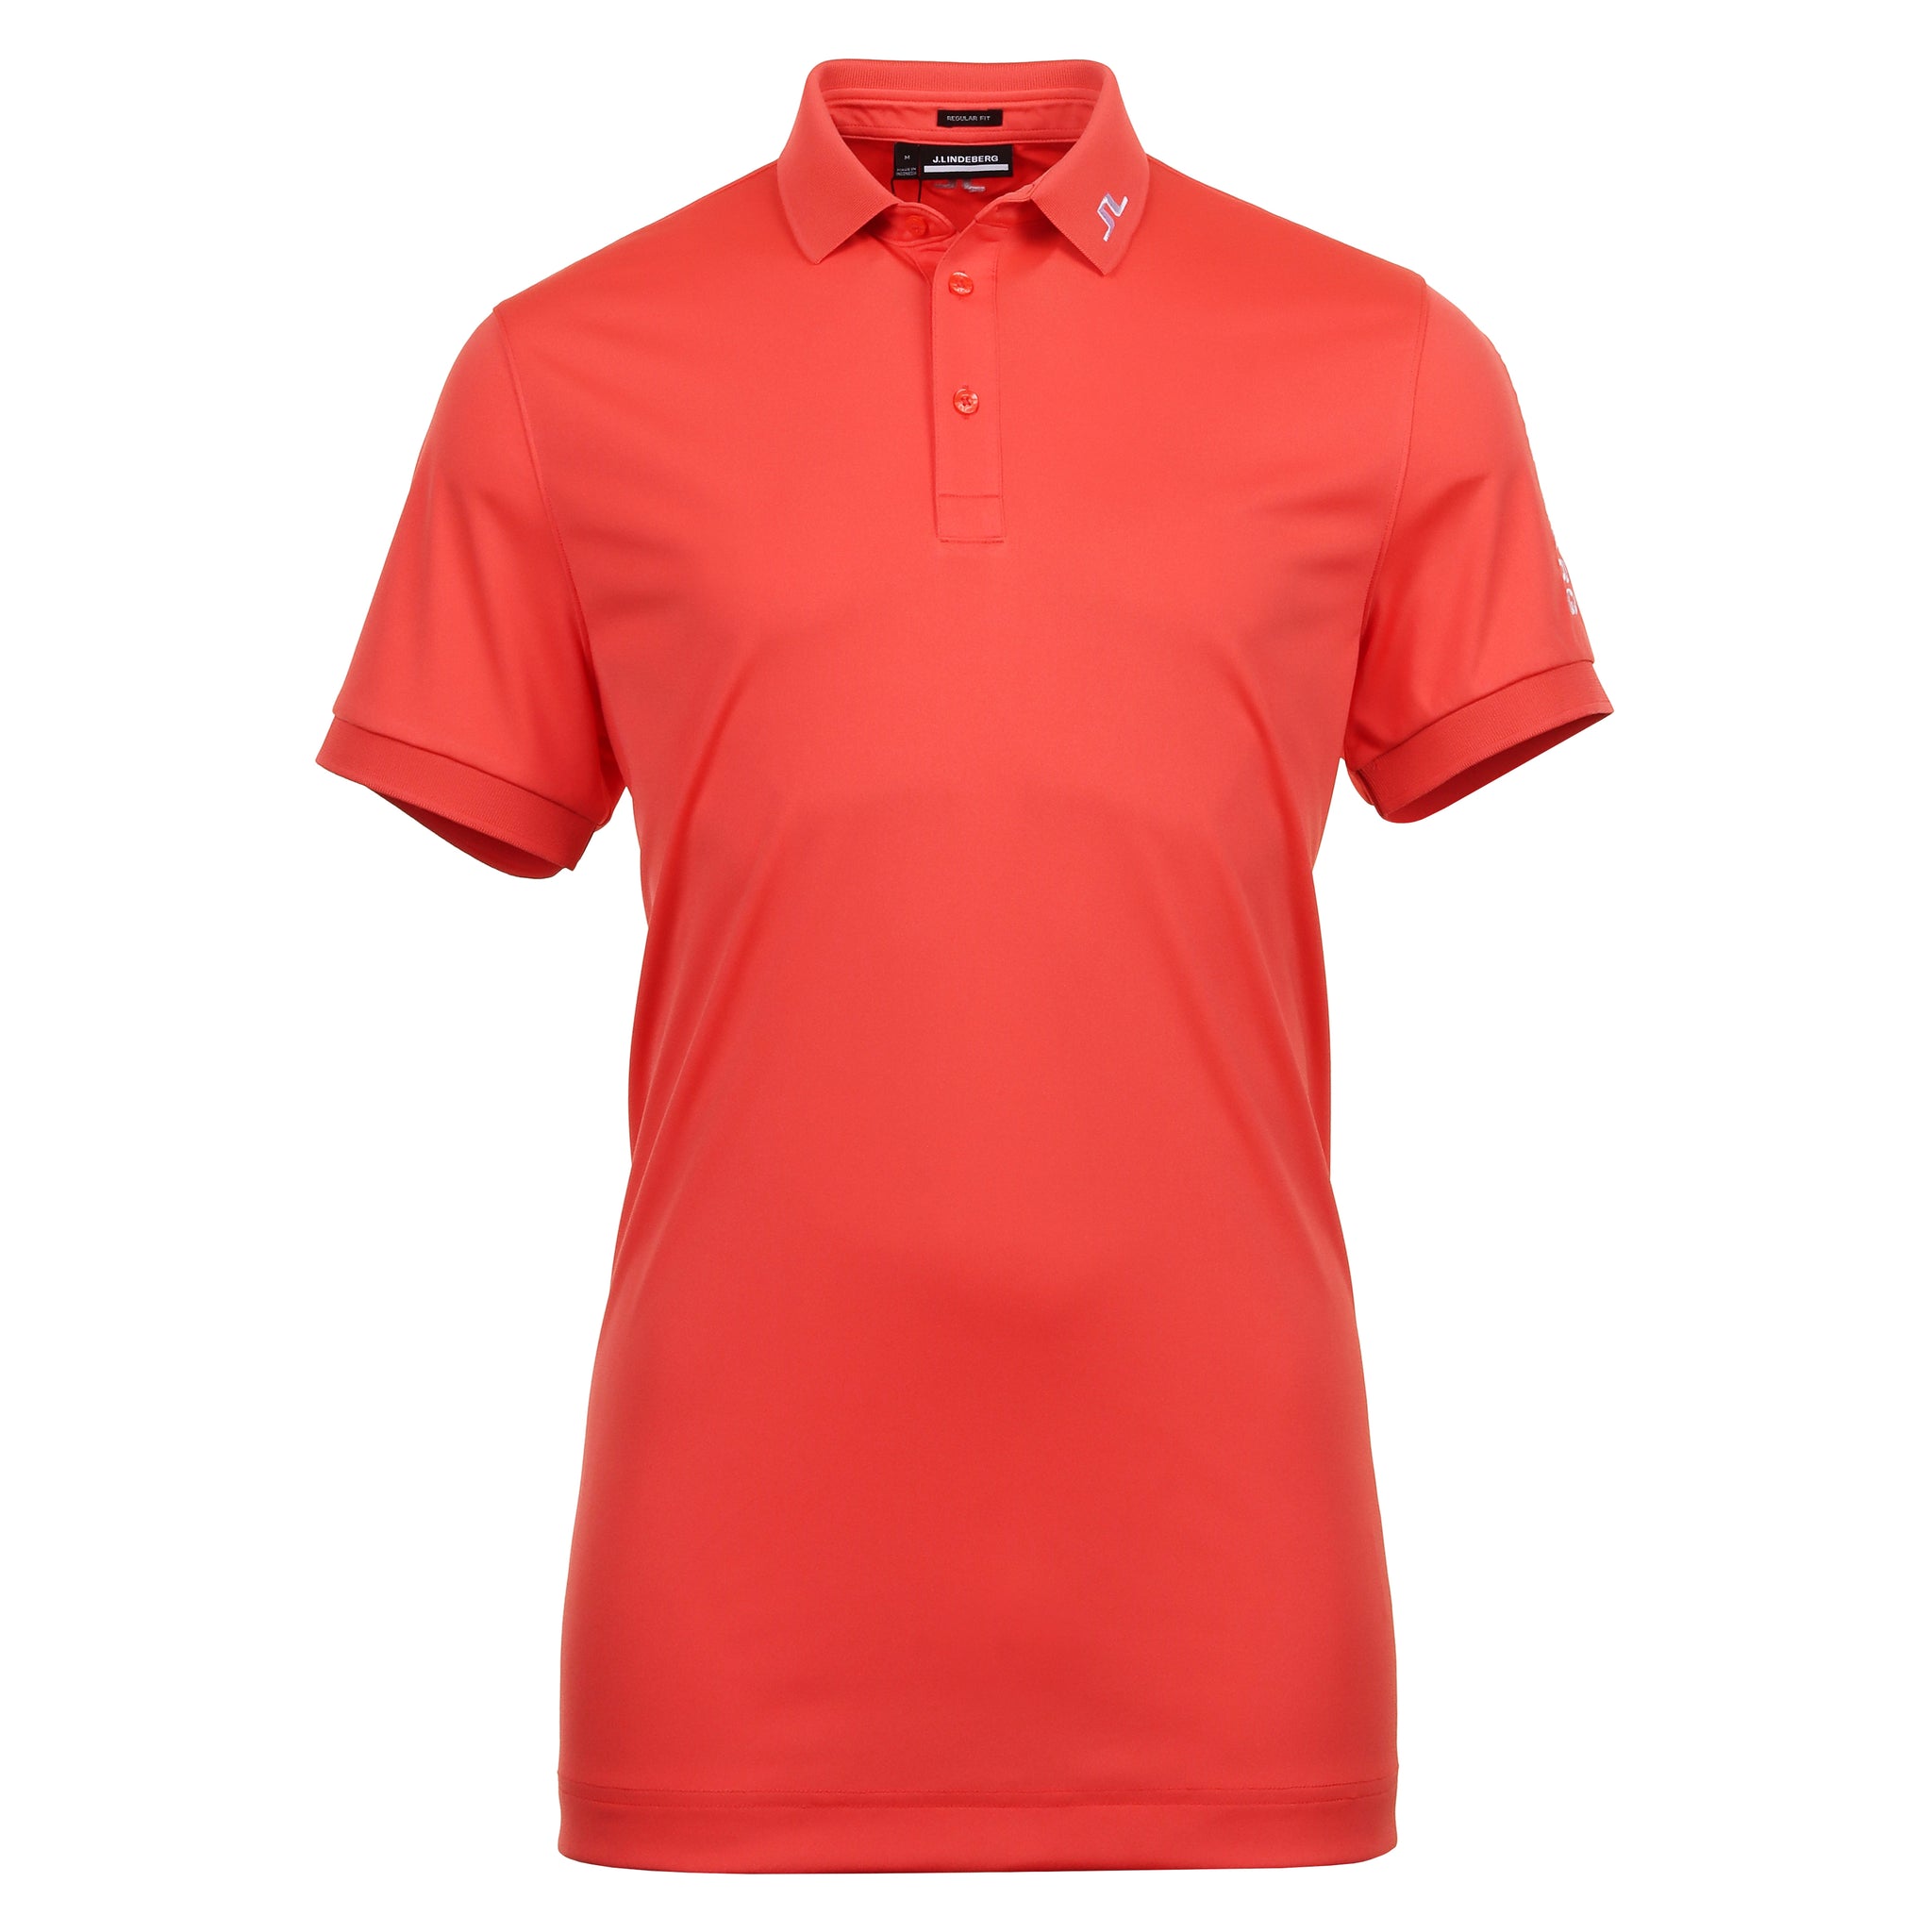 J.Lindeberg Golf Tour Tech Polo Shirt GMJT11232 Hot Coral G050 ...